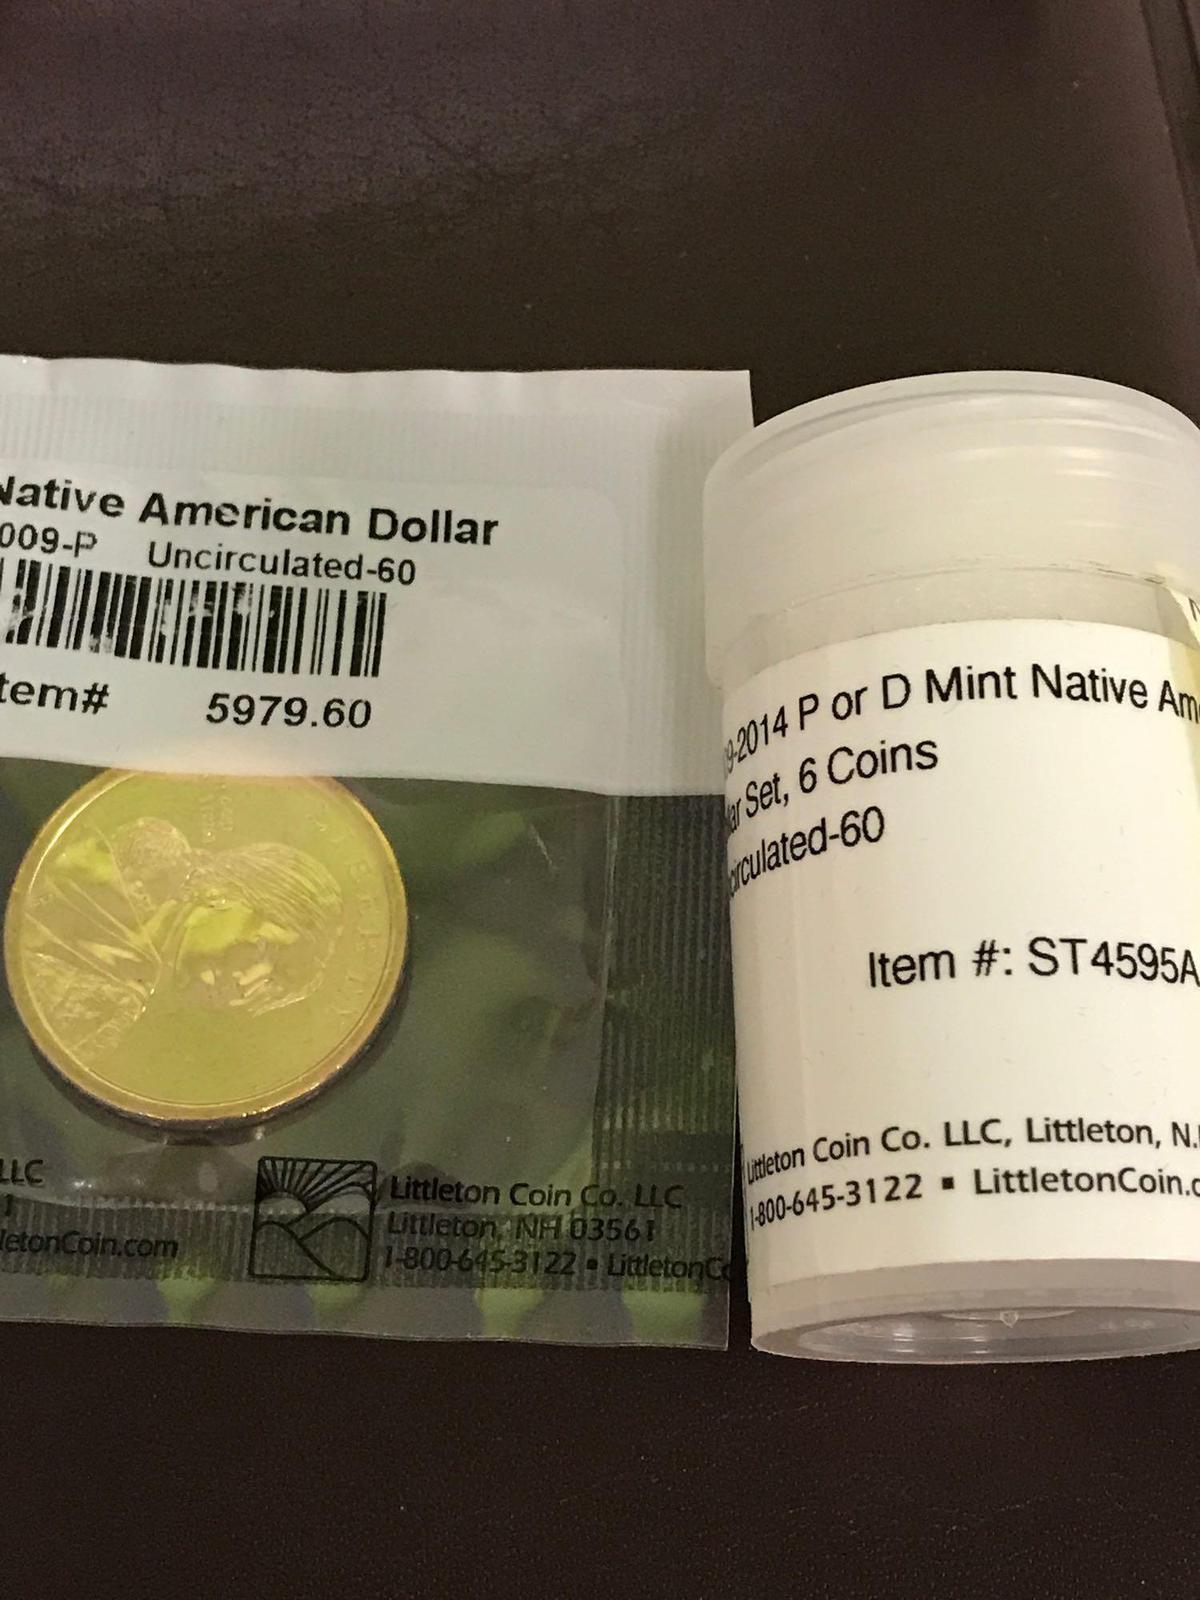 7 native American dollars